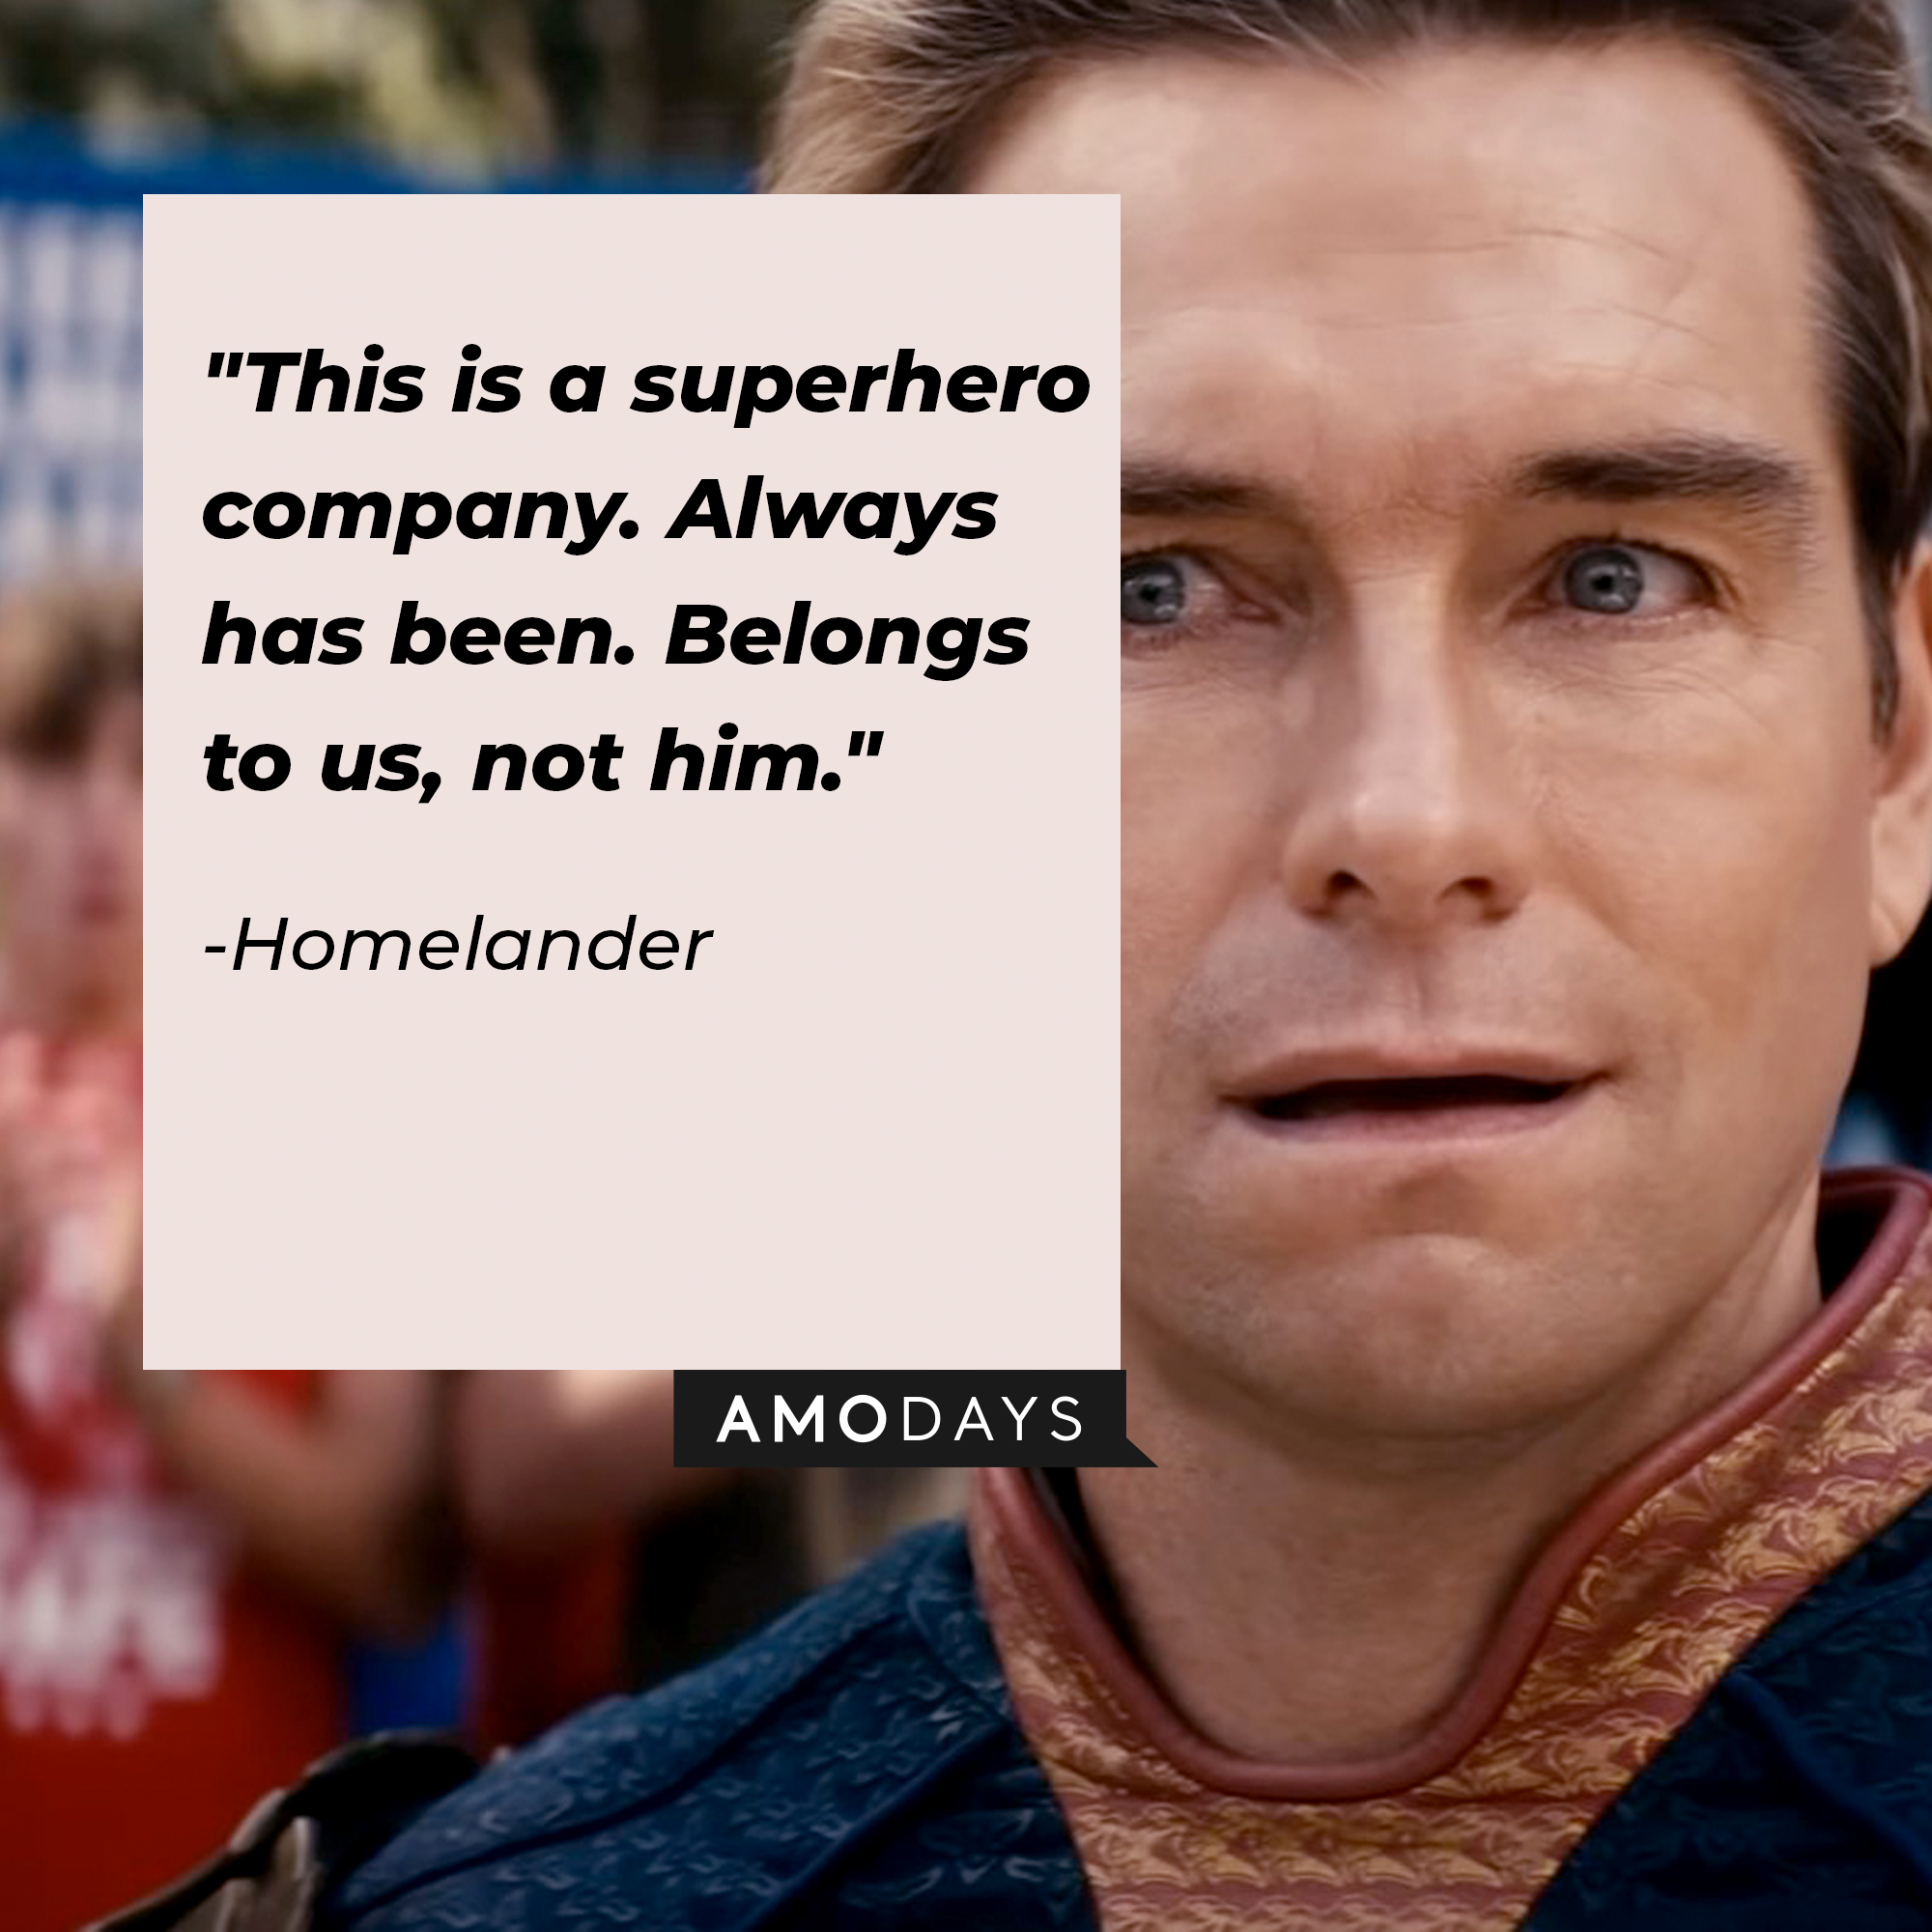 Homelander's quote: "This is a superhero company. Always has been. Belongs to us, not him." | Source: Facebook.com/TheBoysTV